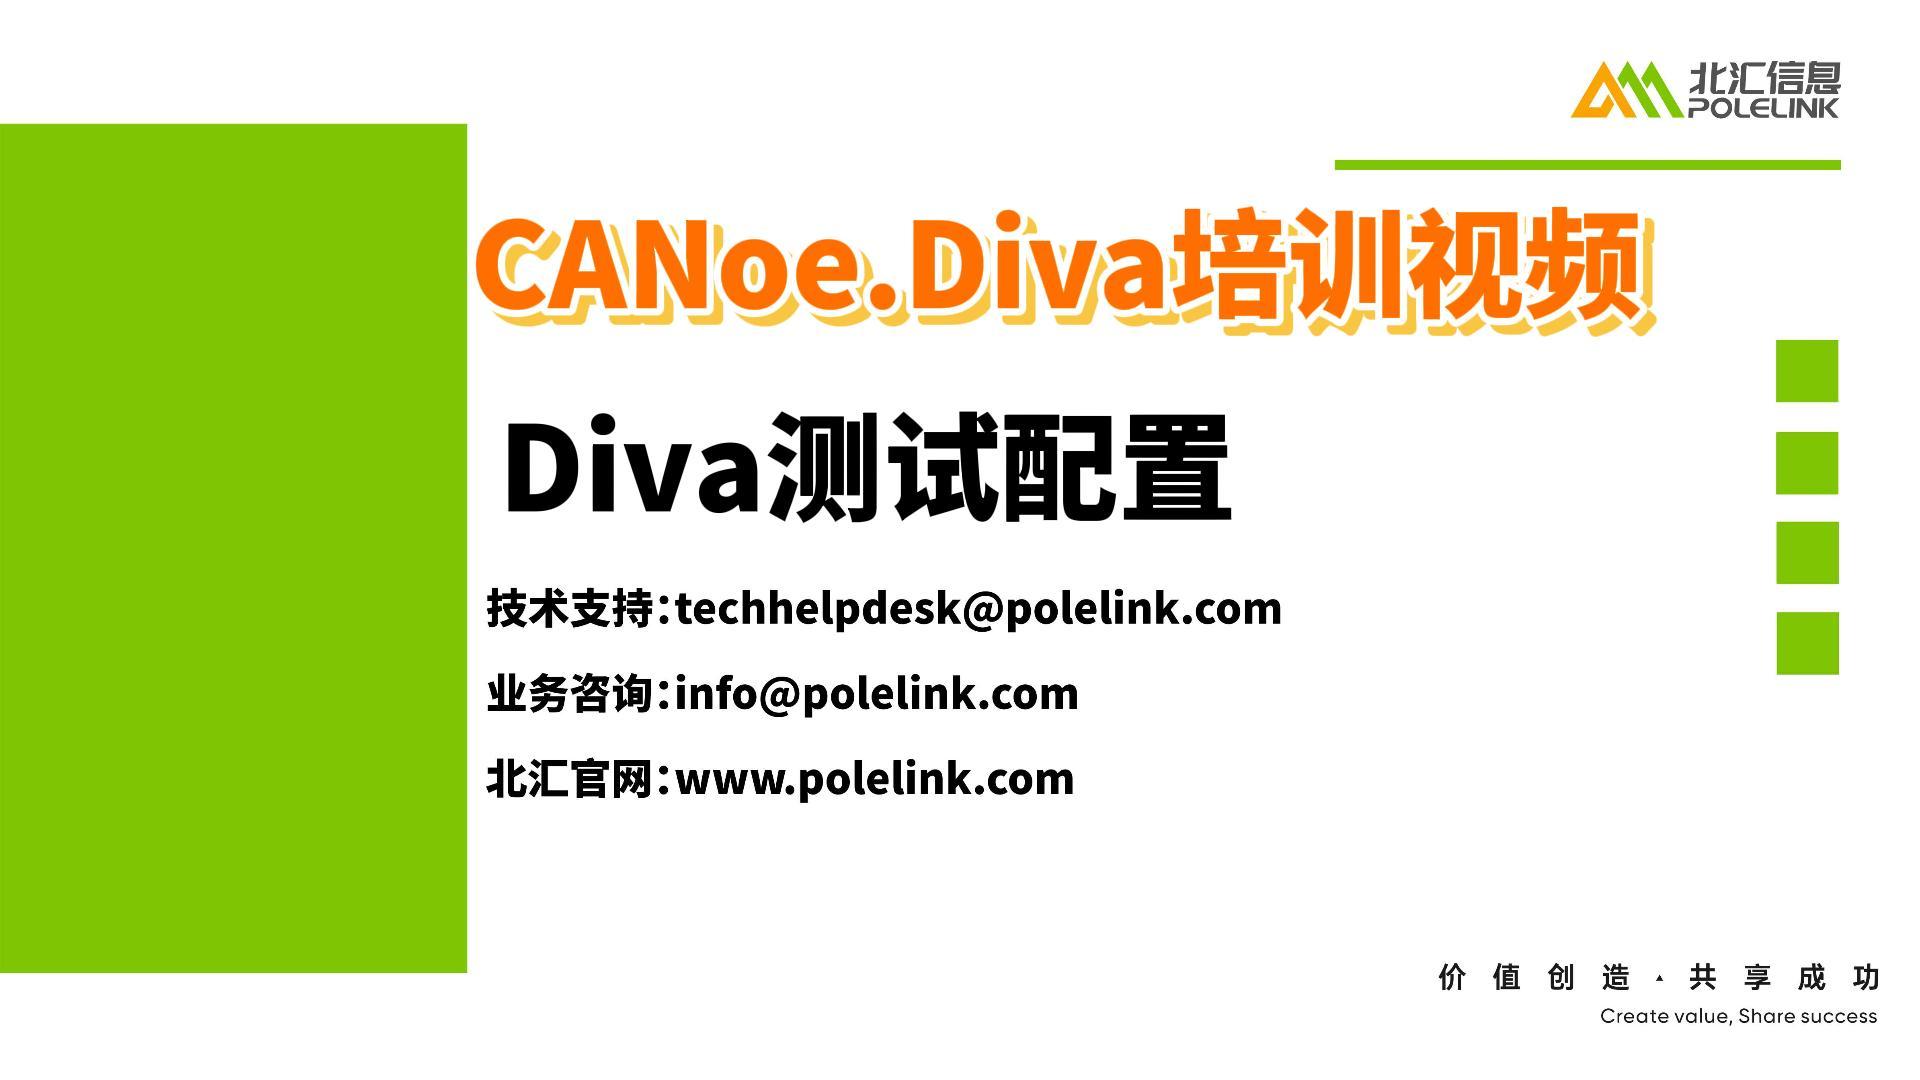 CANoe.Diva培训视频-Diva测试配置#CANoe#Diva#诊断自动化测试

 